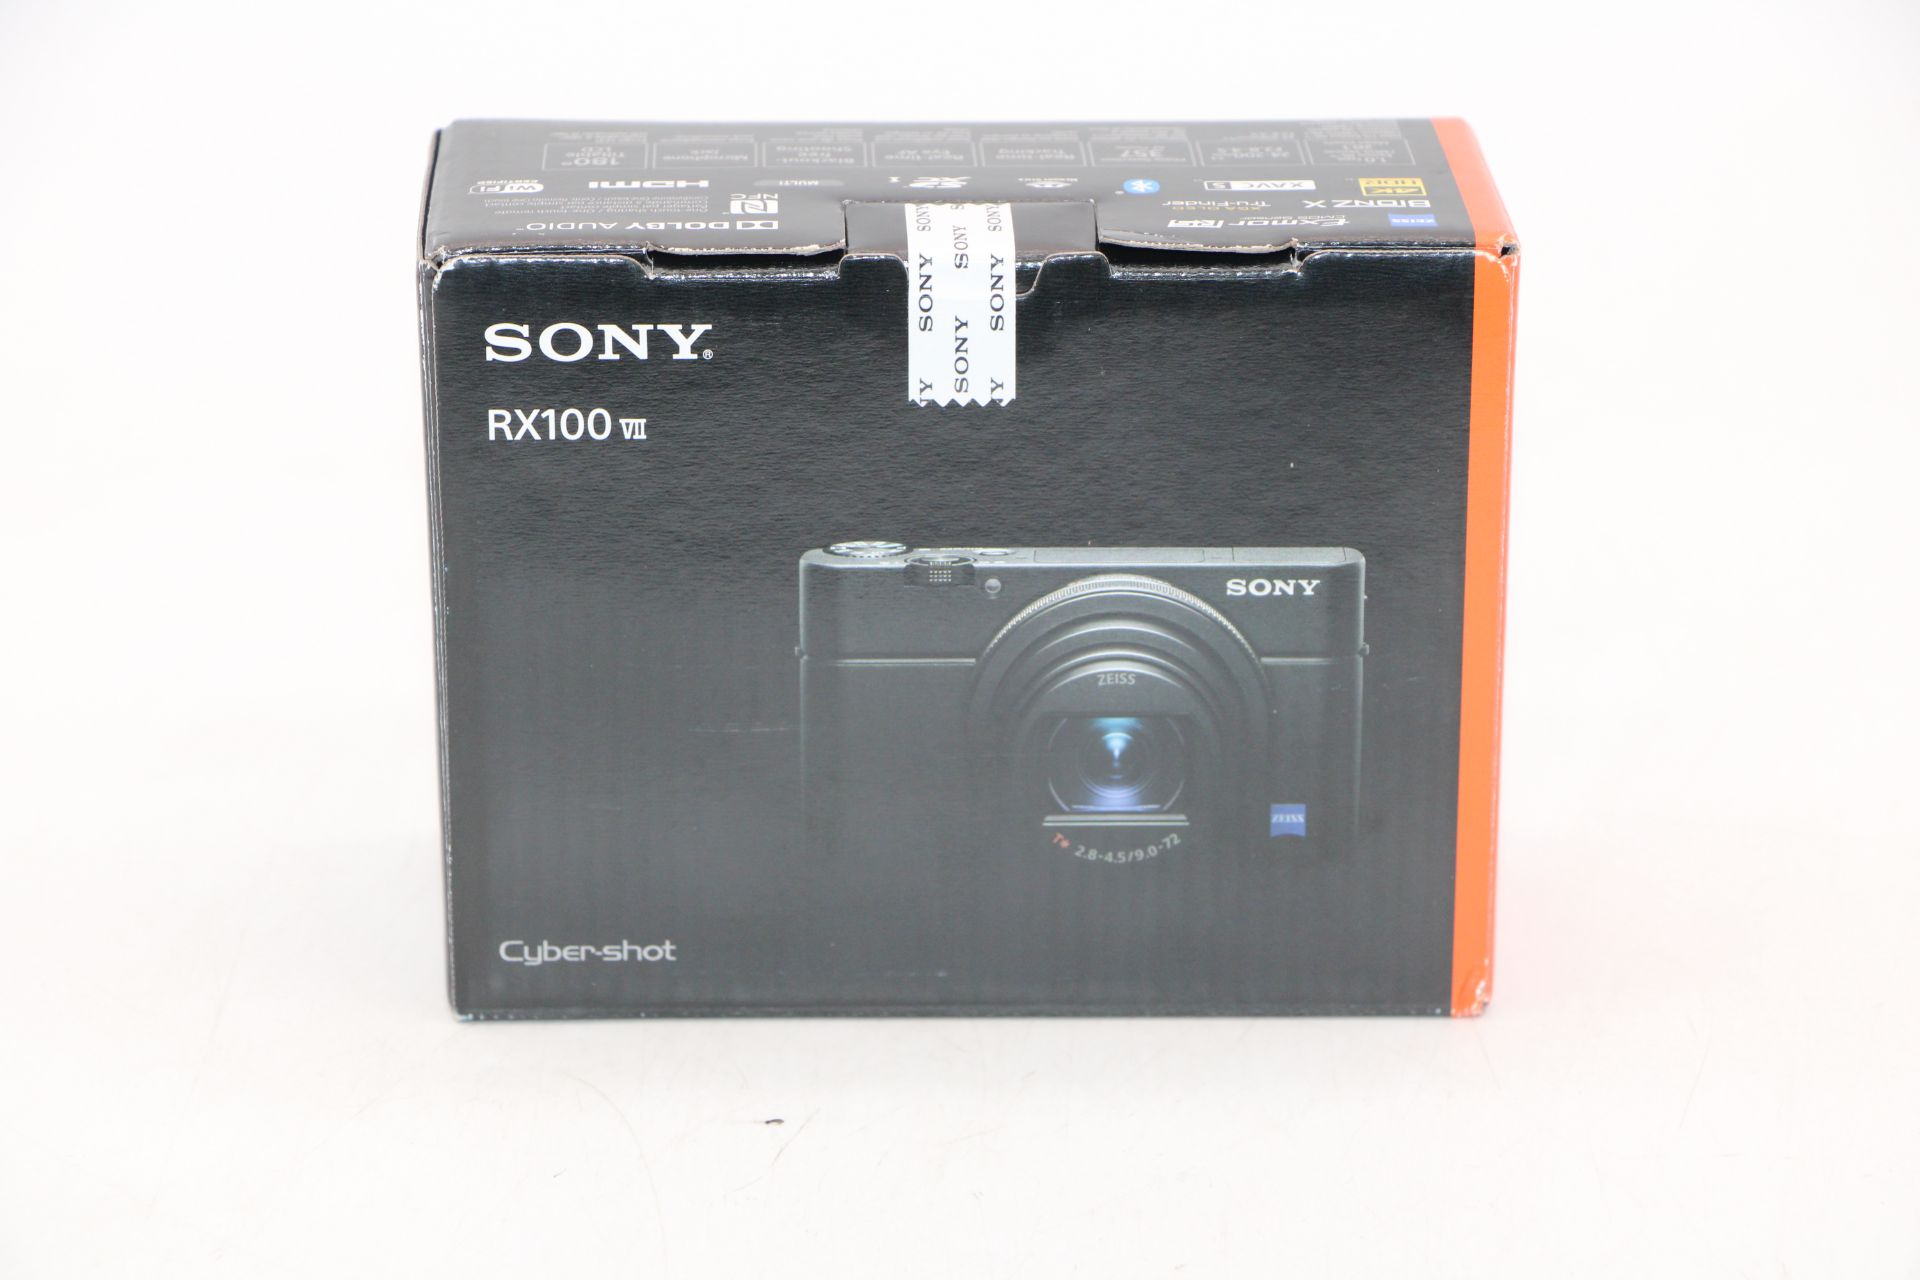 Sony Cyber-shot DSC-RX100 VII Digital Camera RX100M7, Black - Image 2 of 2